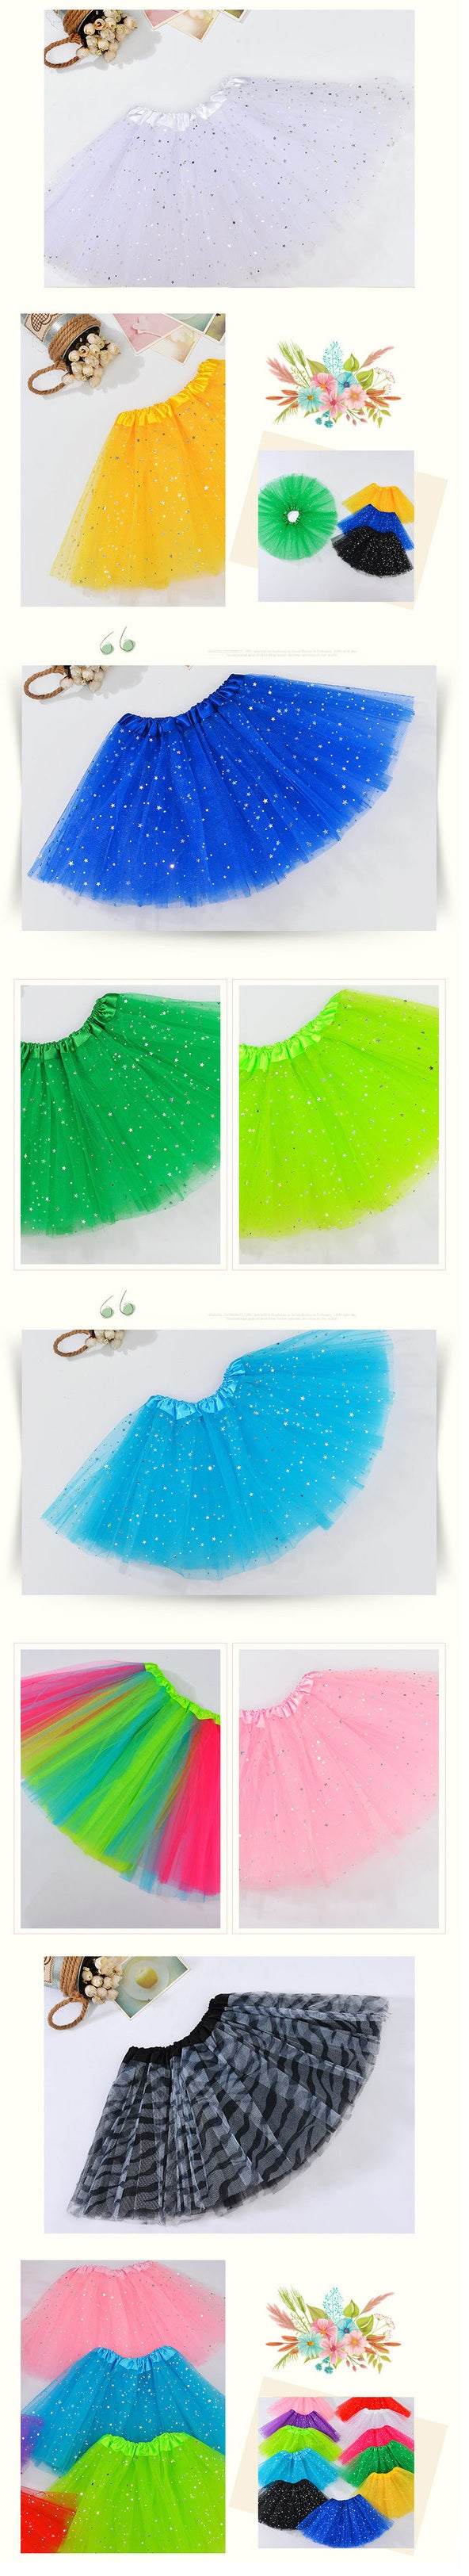 Sequin Tulle Tutu Skirt Ballet Kids Princess Dressup Party Baby Girls Dance Wear, Blue, Kids